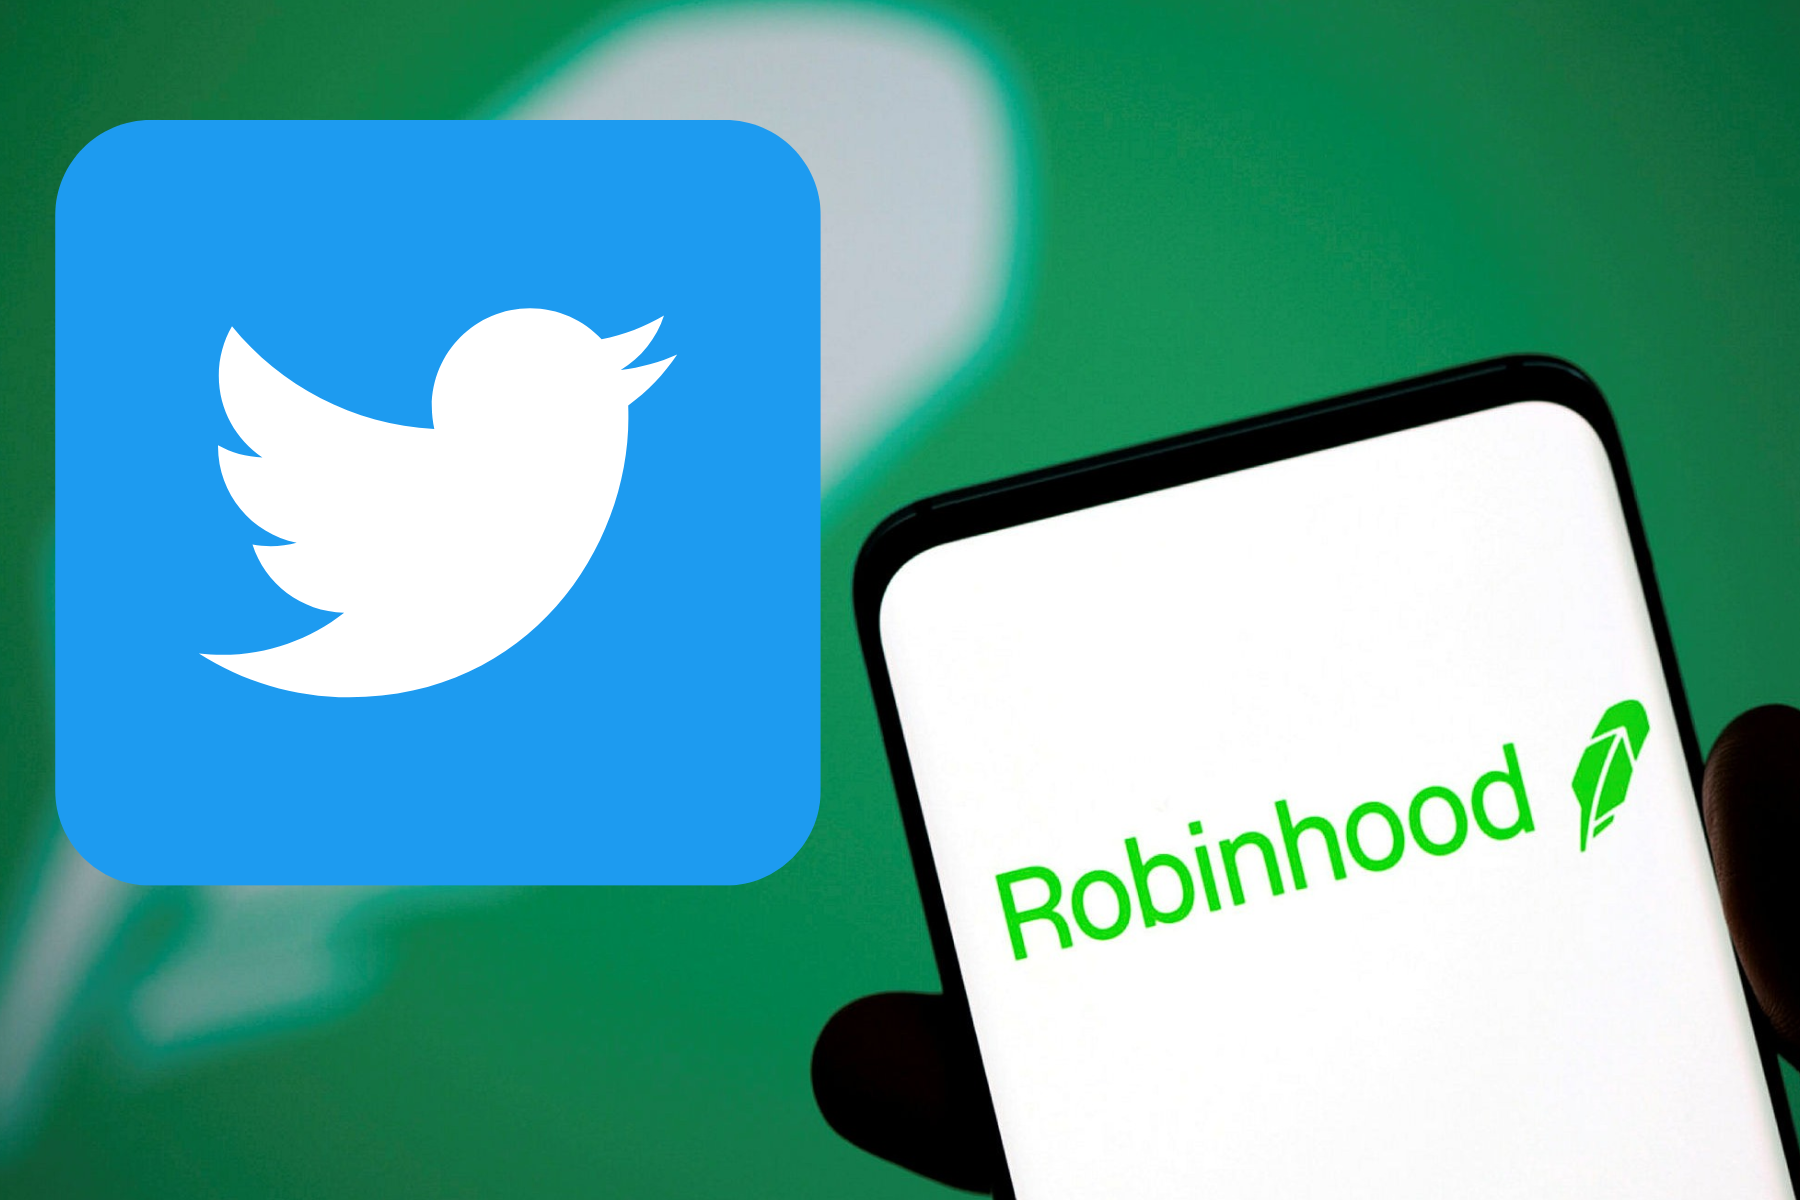 A mobile phone displaying Robinhood beside the Twitter logo